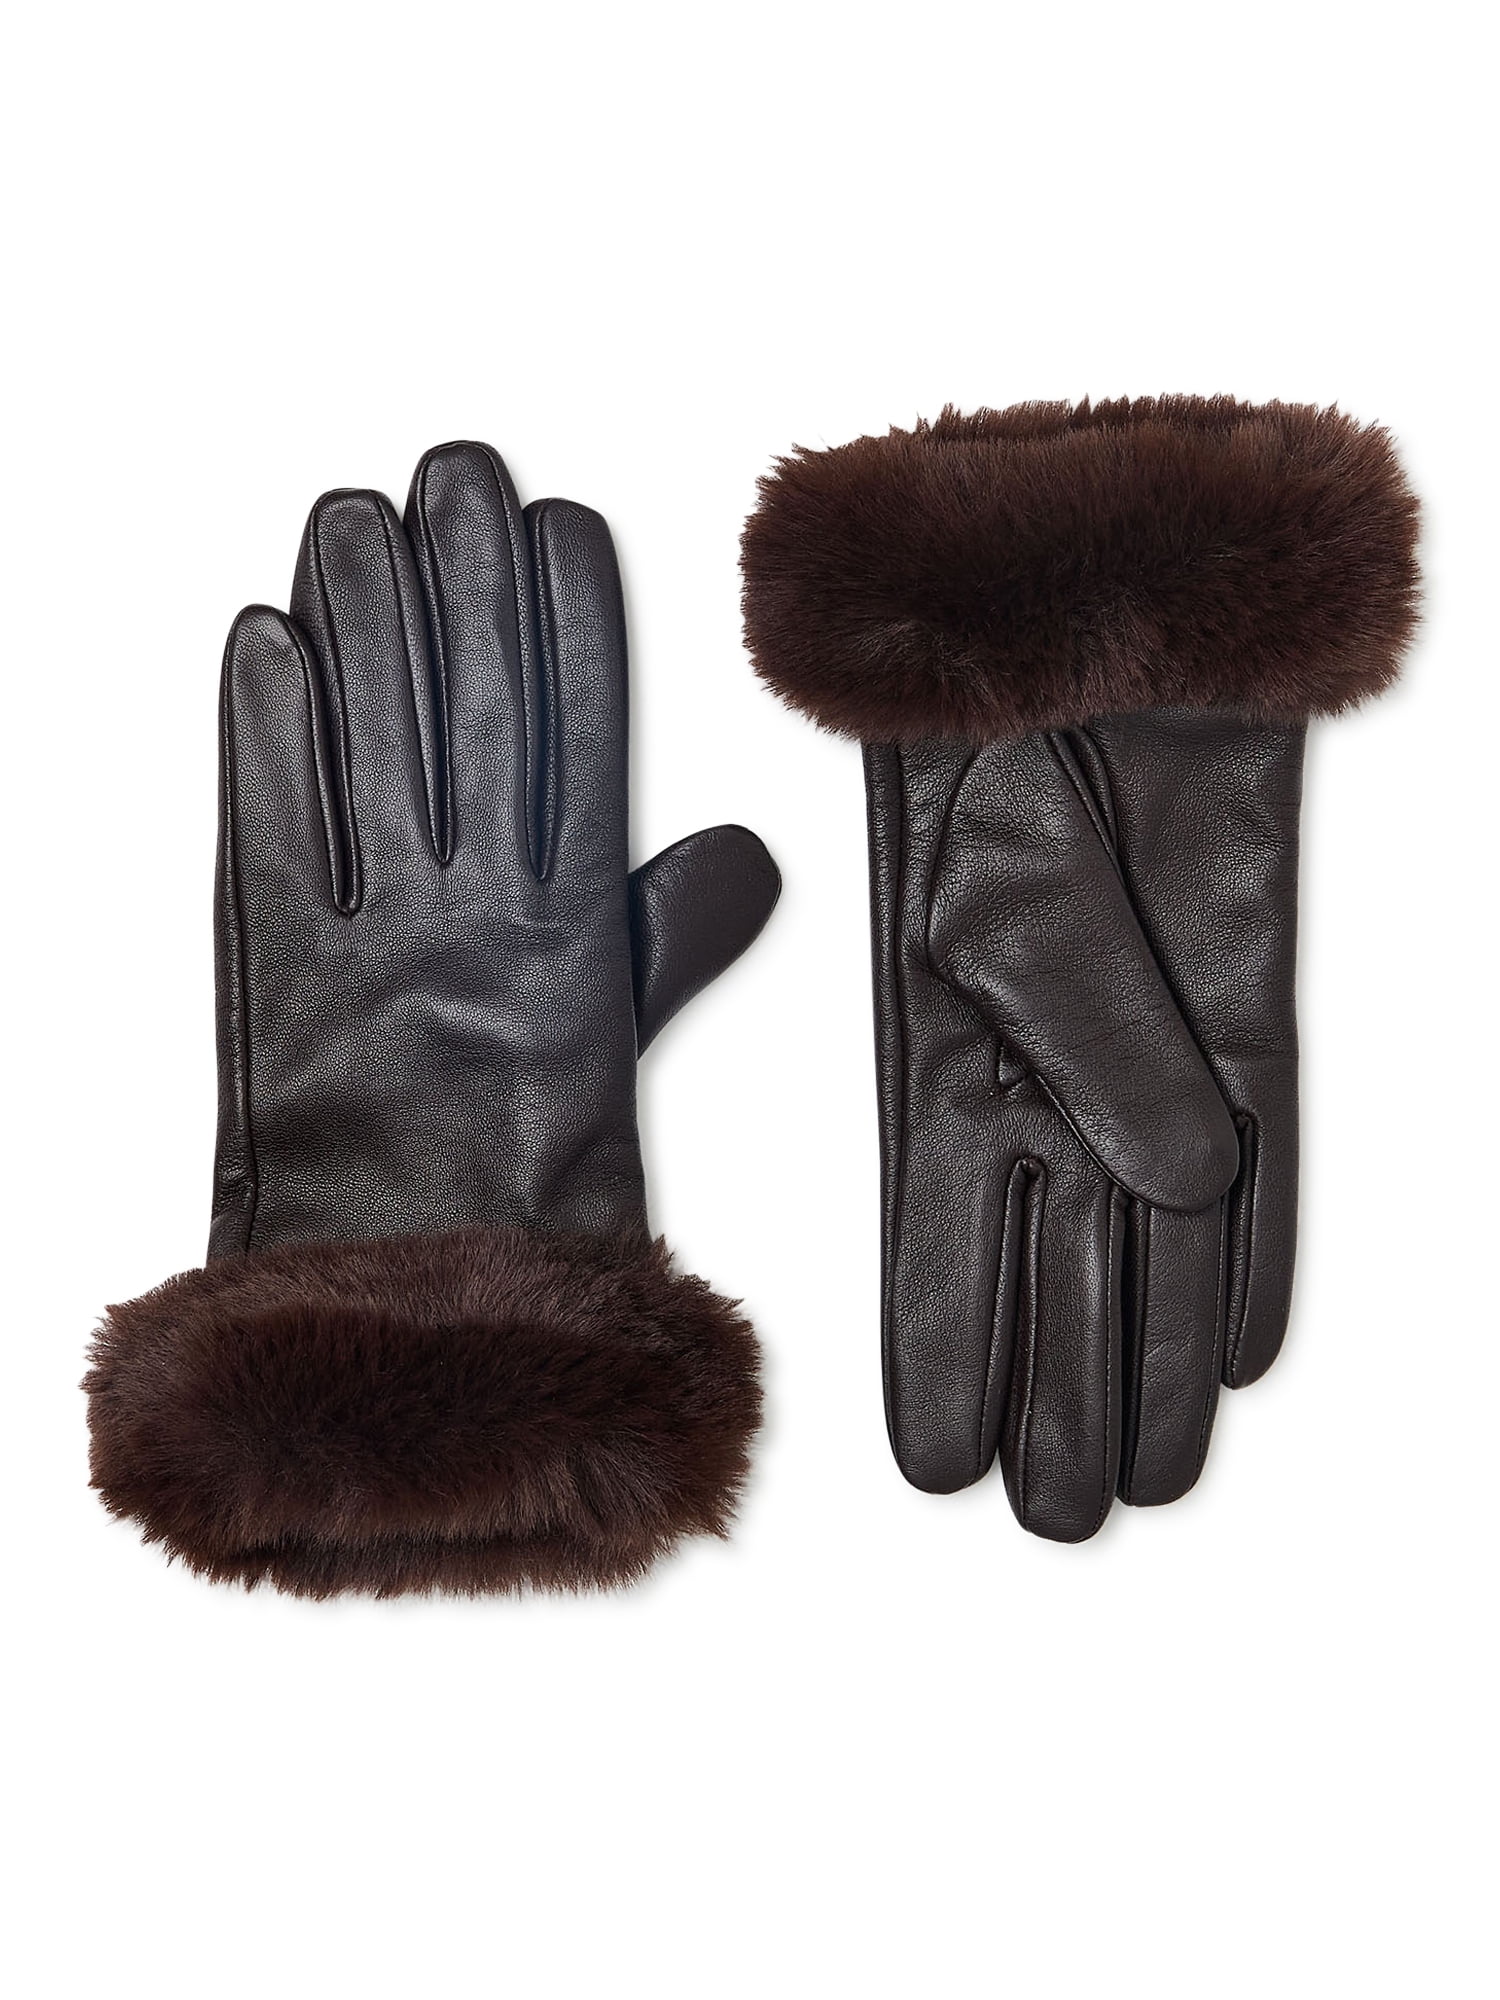 Women's Girl Cute Cloth Mittens Winter Warm Fleece Gloves Fur Trim Frosted New